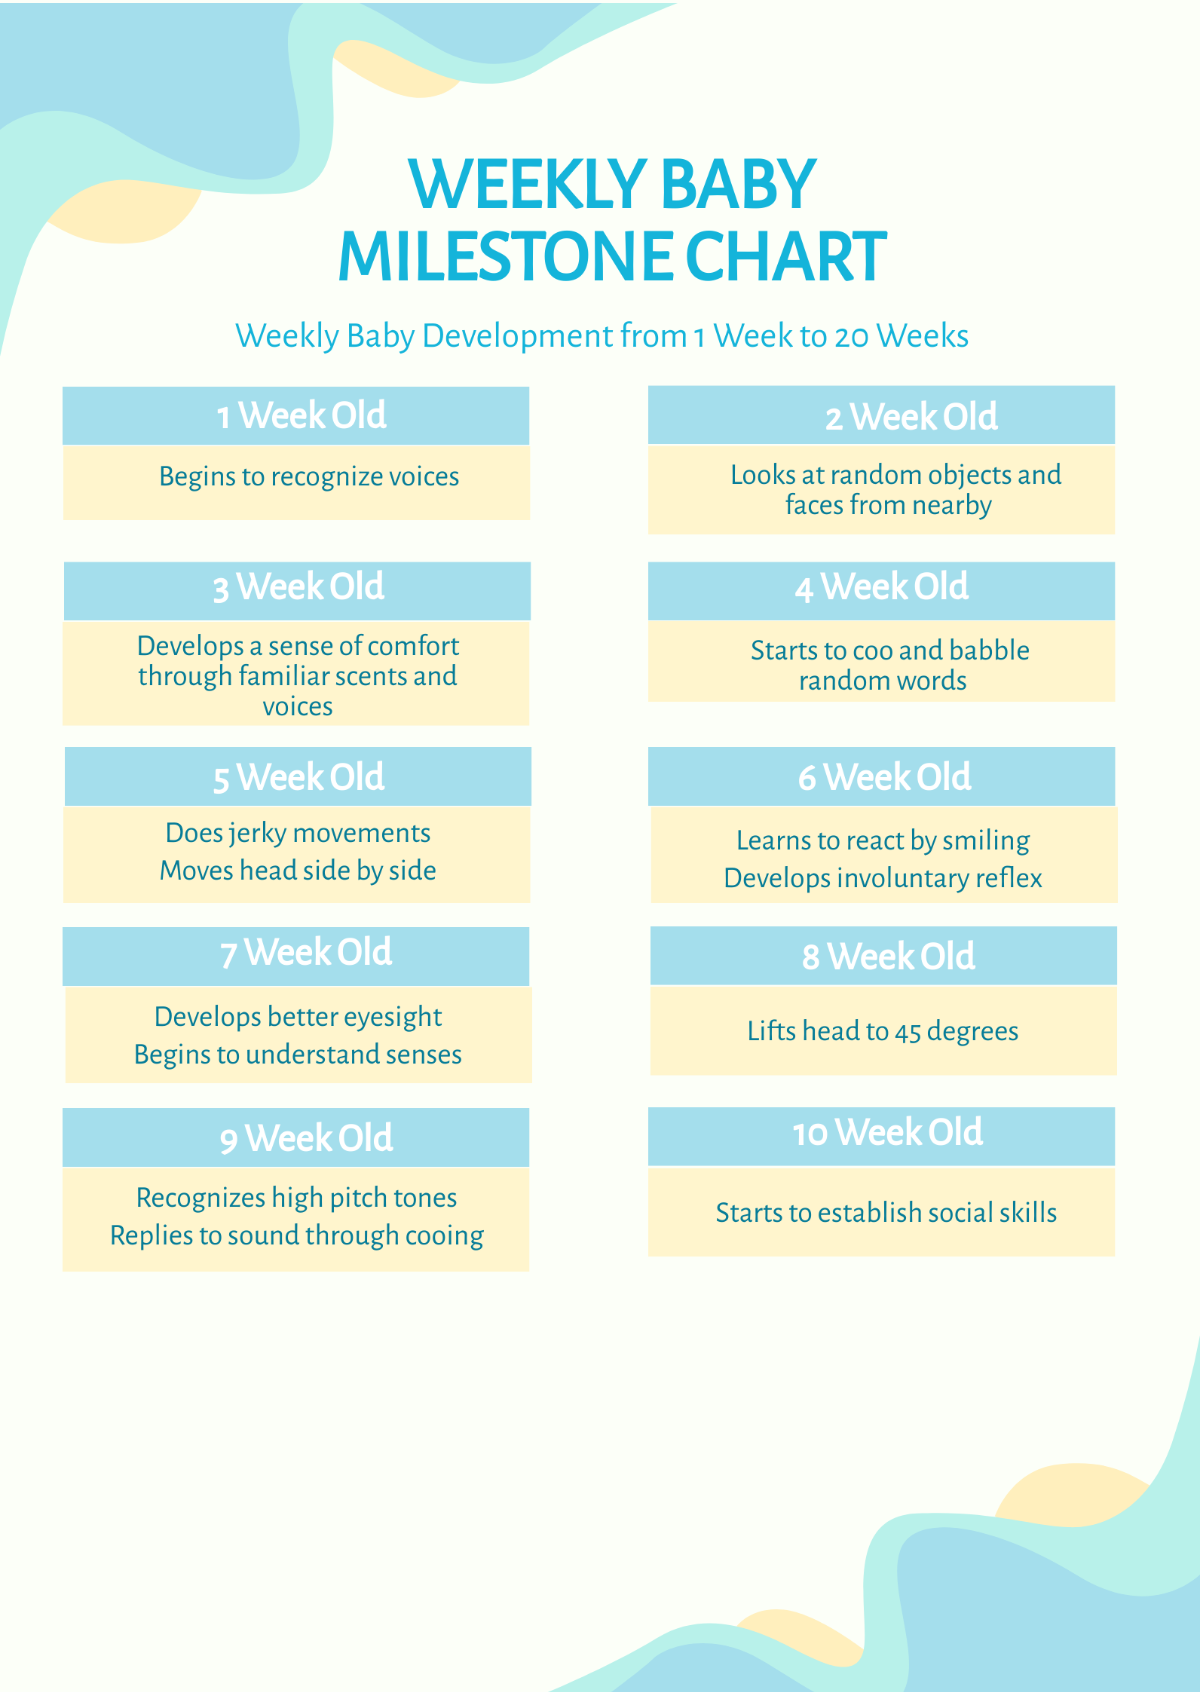 Weekly Baby Milestone Chart